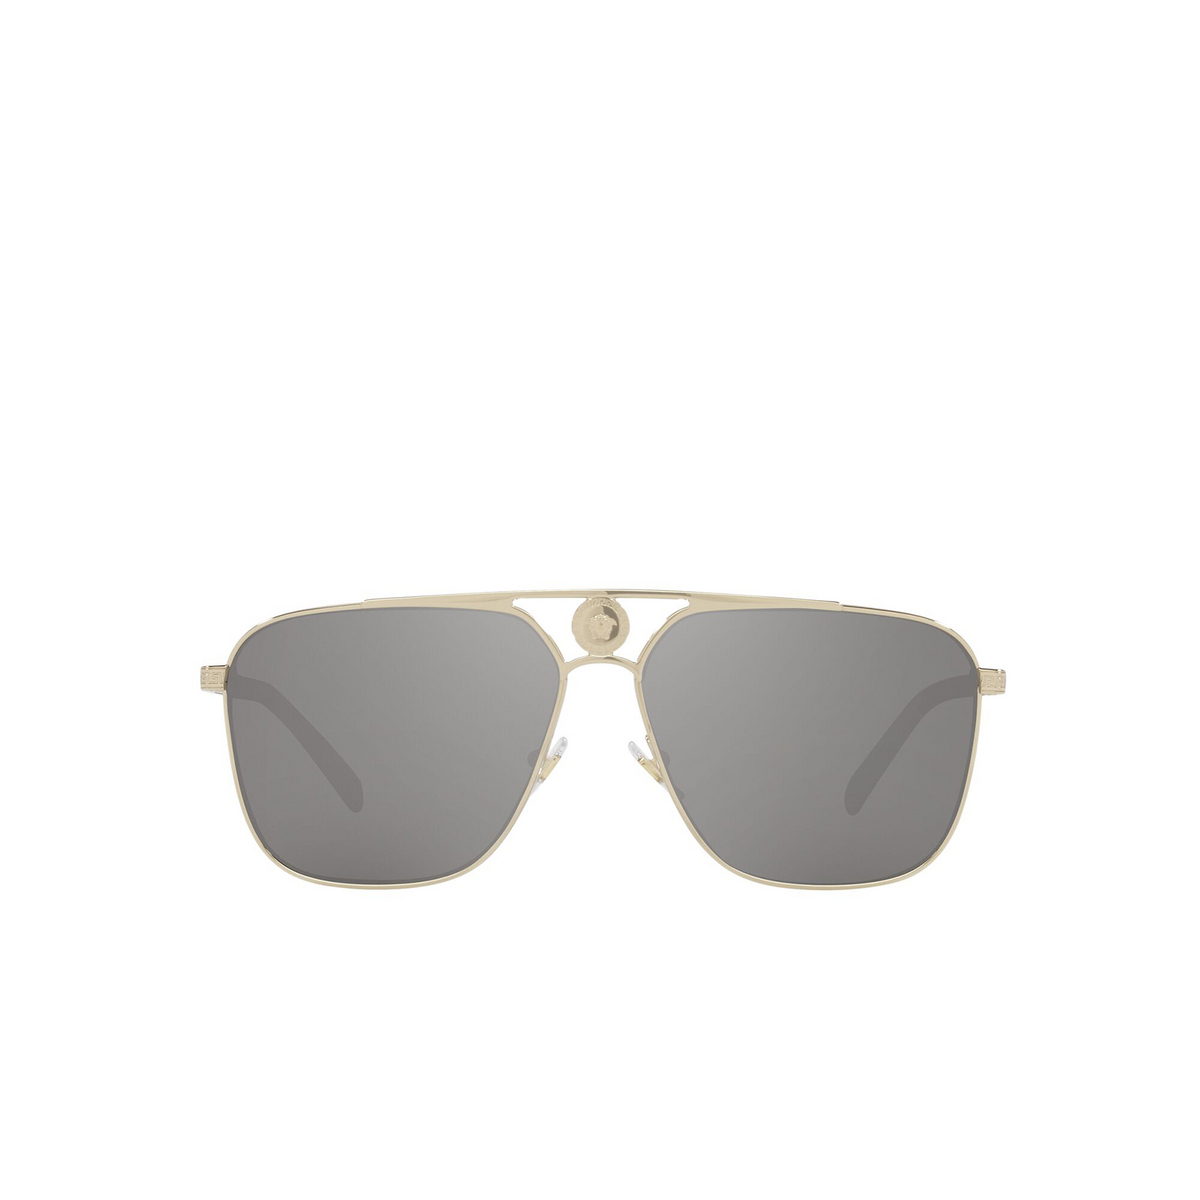 Versace® Square Sunglasses: VE2238 color Pale Gold 12526G - front view.